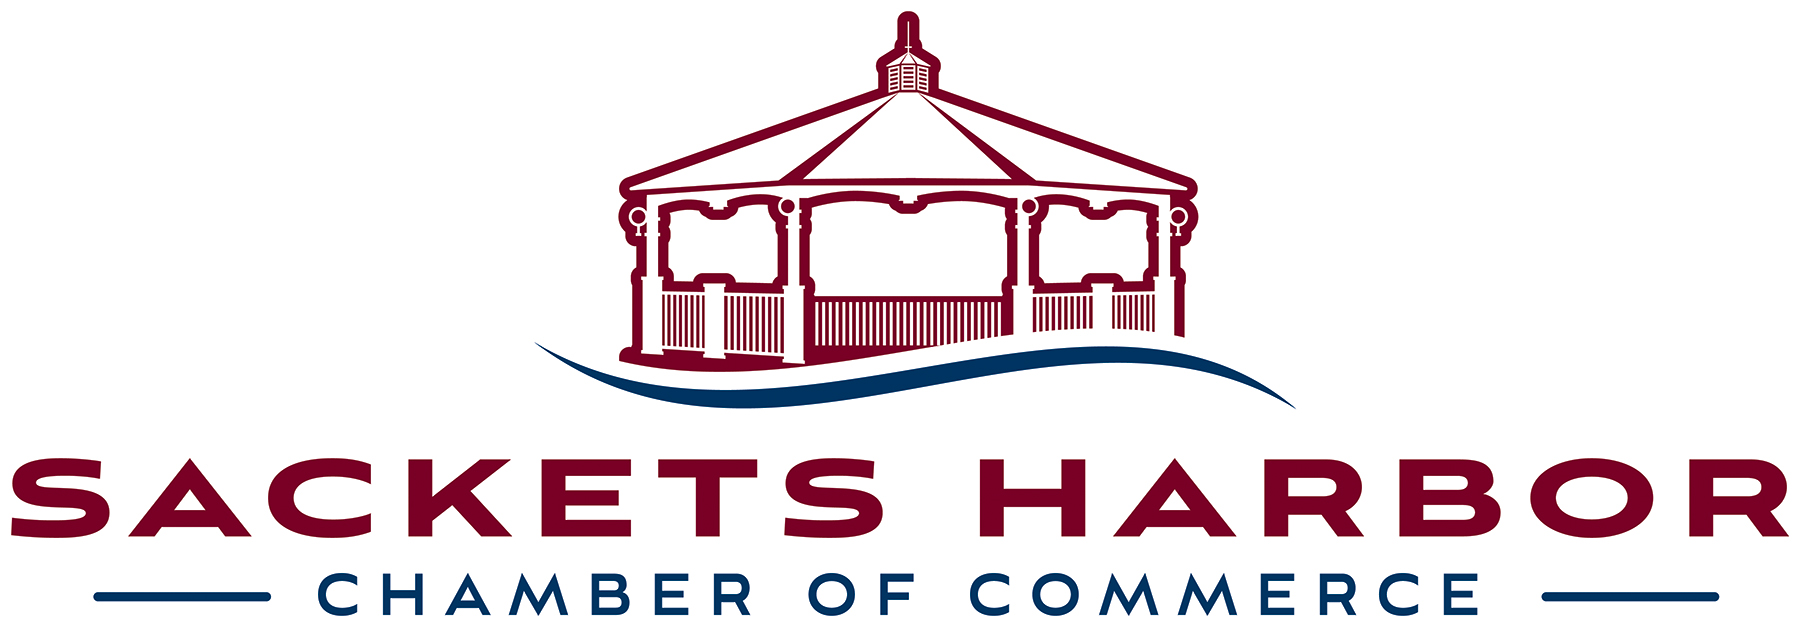 Sackets Harbor Chamber of Commerce logo